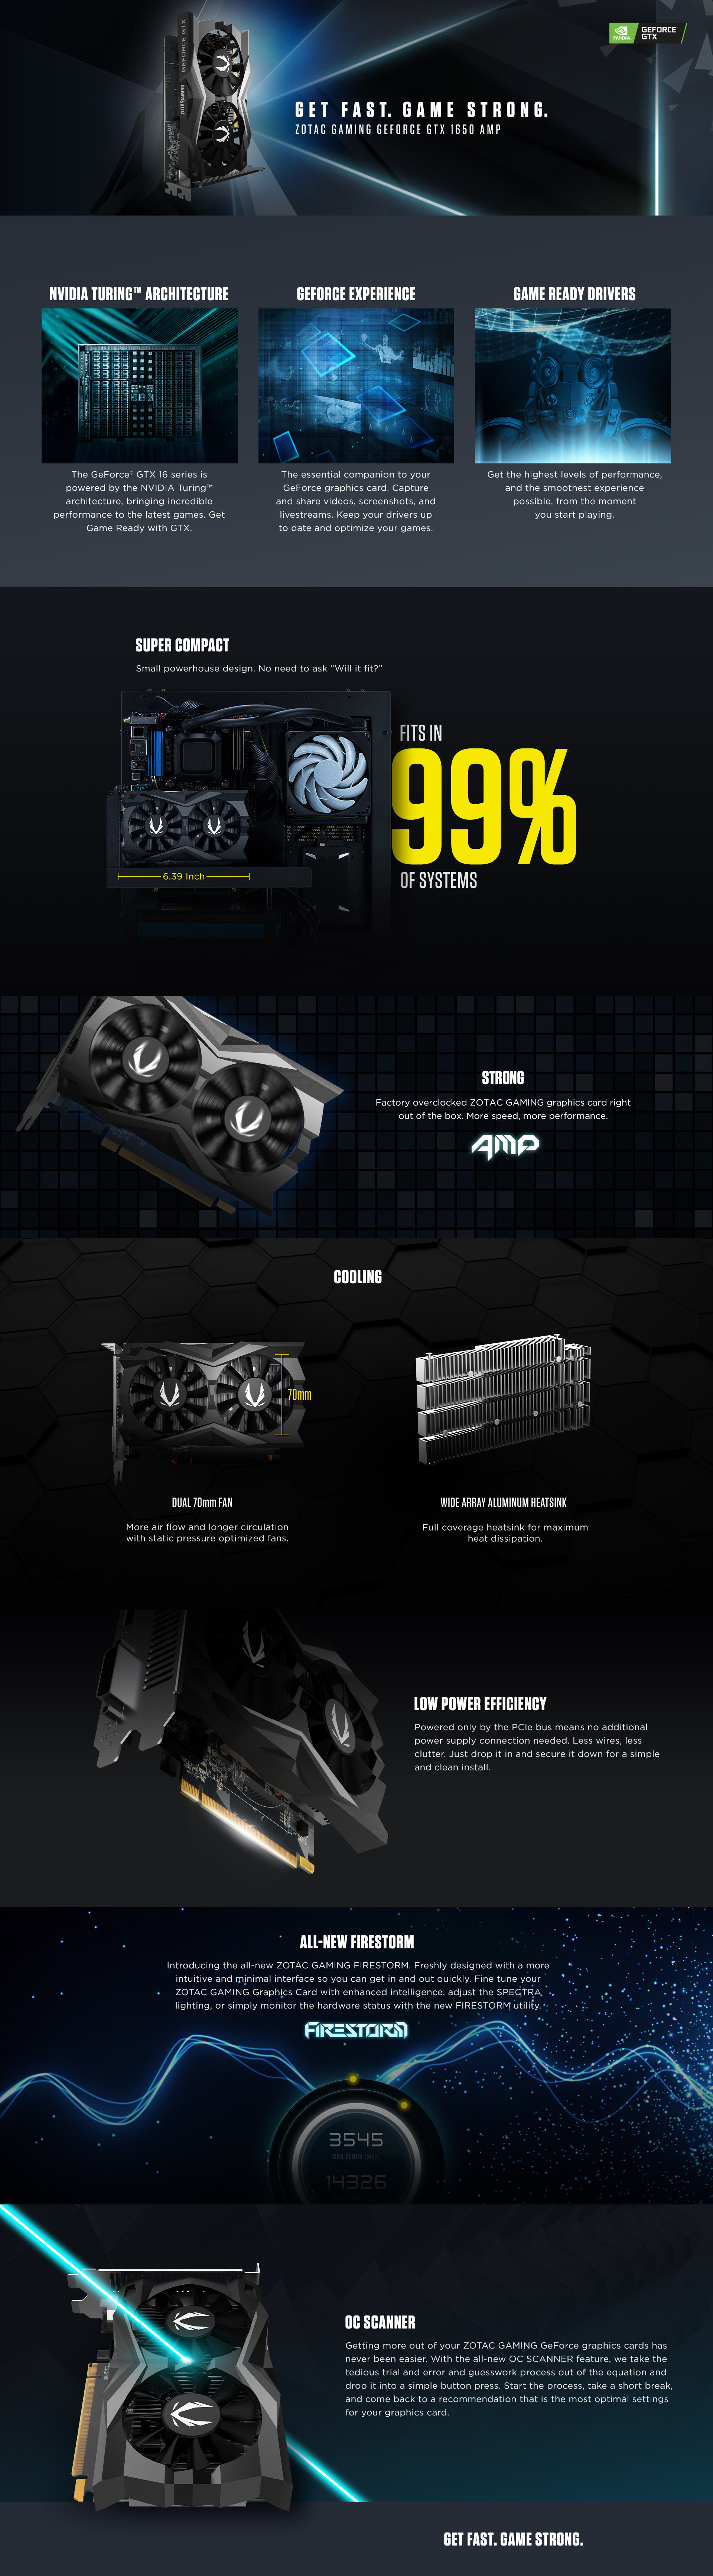 ZOTAC GAMING GeForce GTX 1650 AMP GDDR6 | ZOTAC